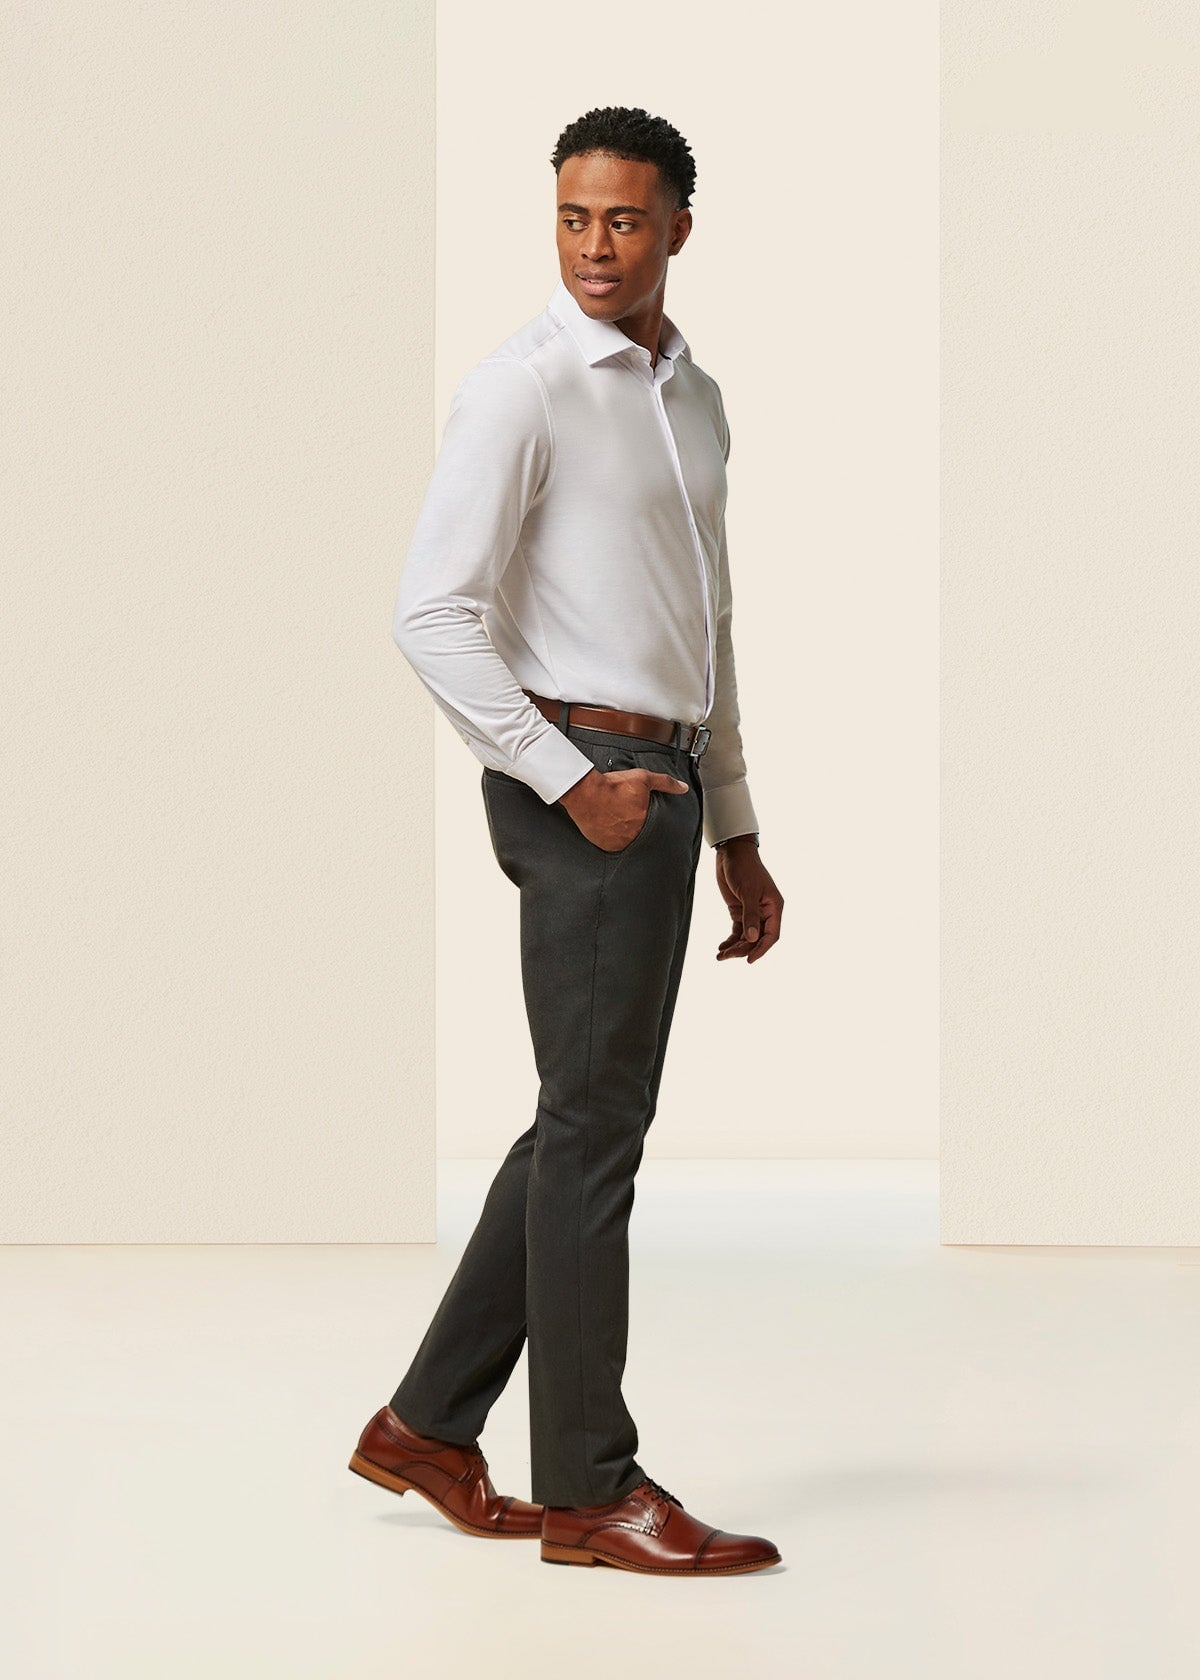 Zara Uniform Men's Gray Work Pants Slacks US Size 34 Inseam 30